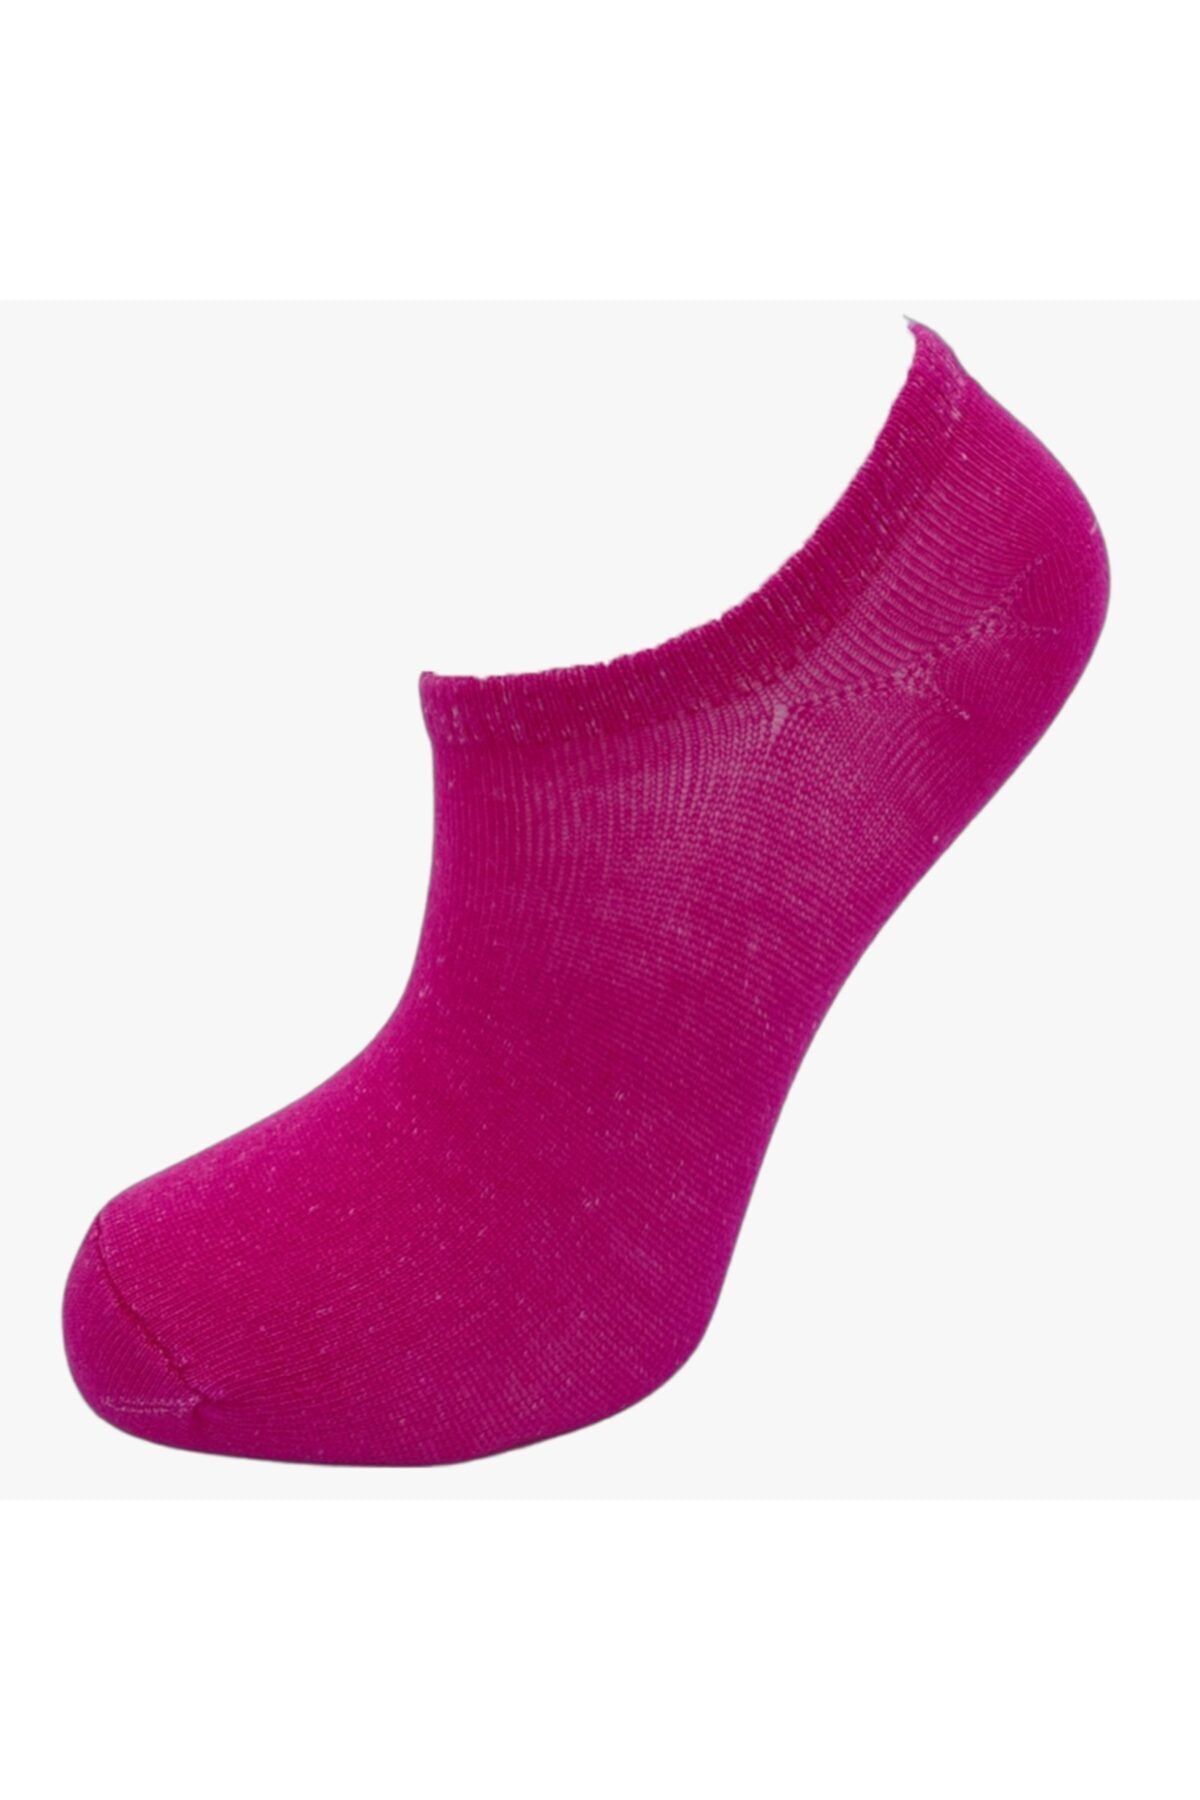 pazariz Patik Çorap 6 Lı